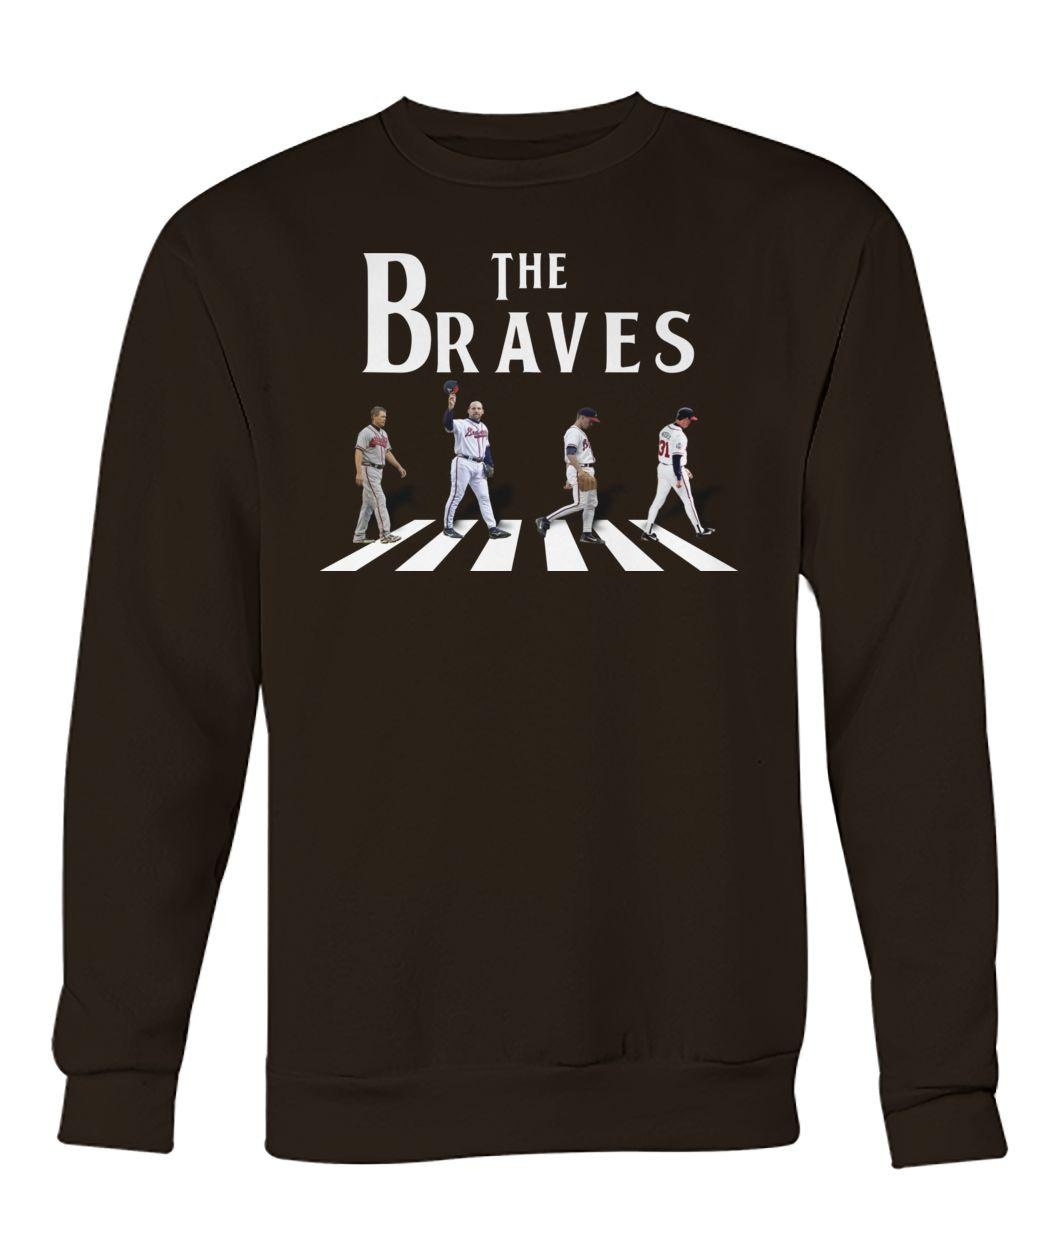 The braves abbey road sweatshirt